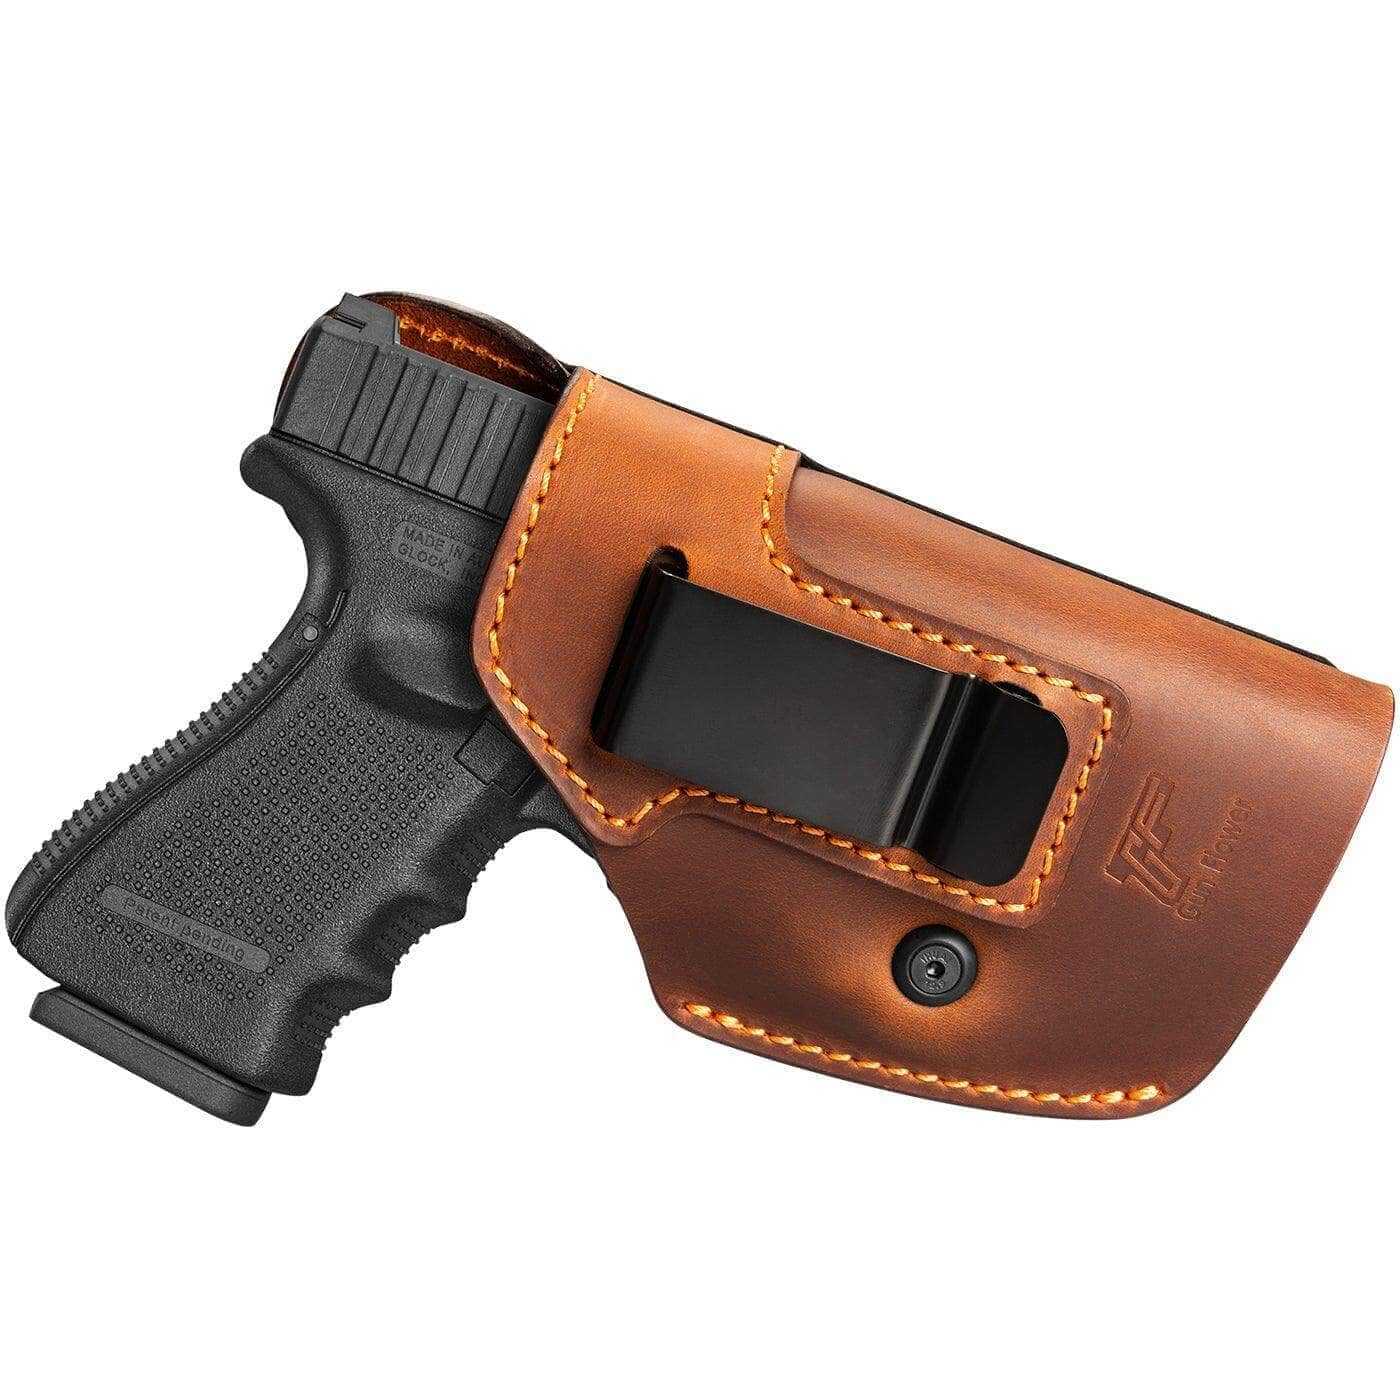 Holster for Glock 43/43X Polymer Holster Fast Draw IWB Plastic Holder Pouch  For Women and Men Hunting Gun Bags Gun&Flower Right